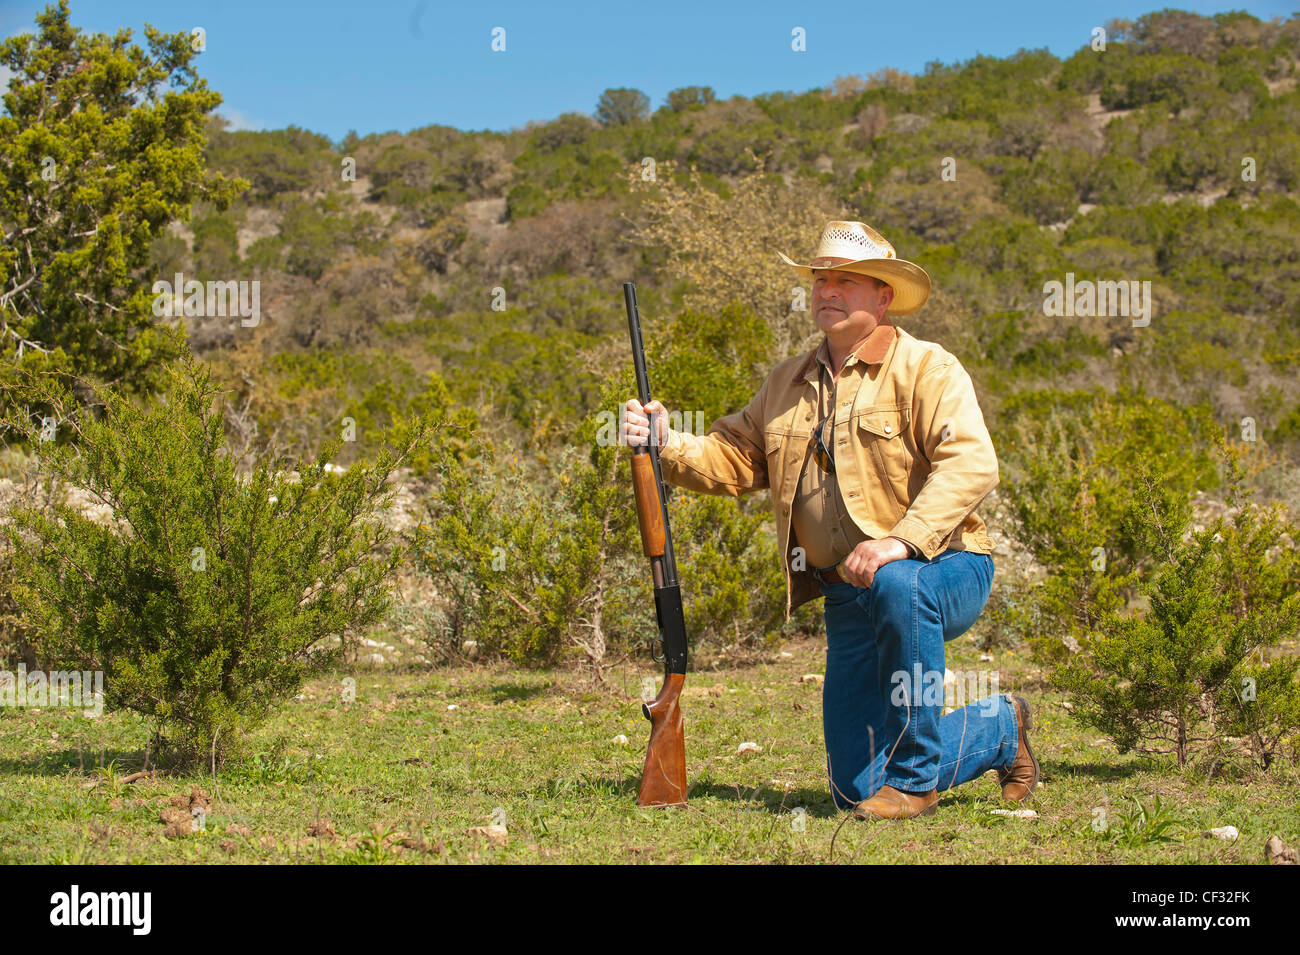 Texas cowboy with gun kneeling down Stock Photo